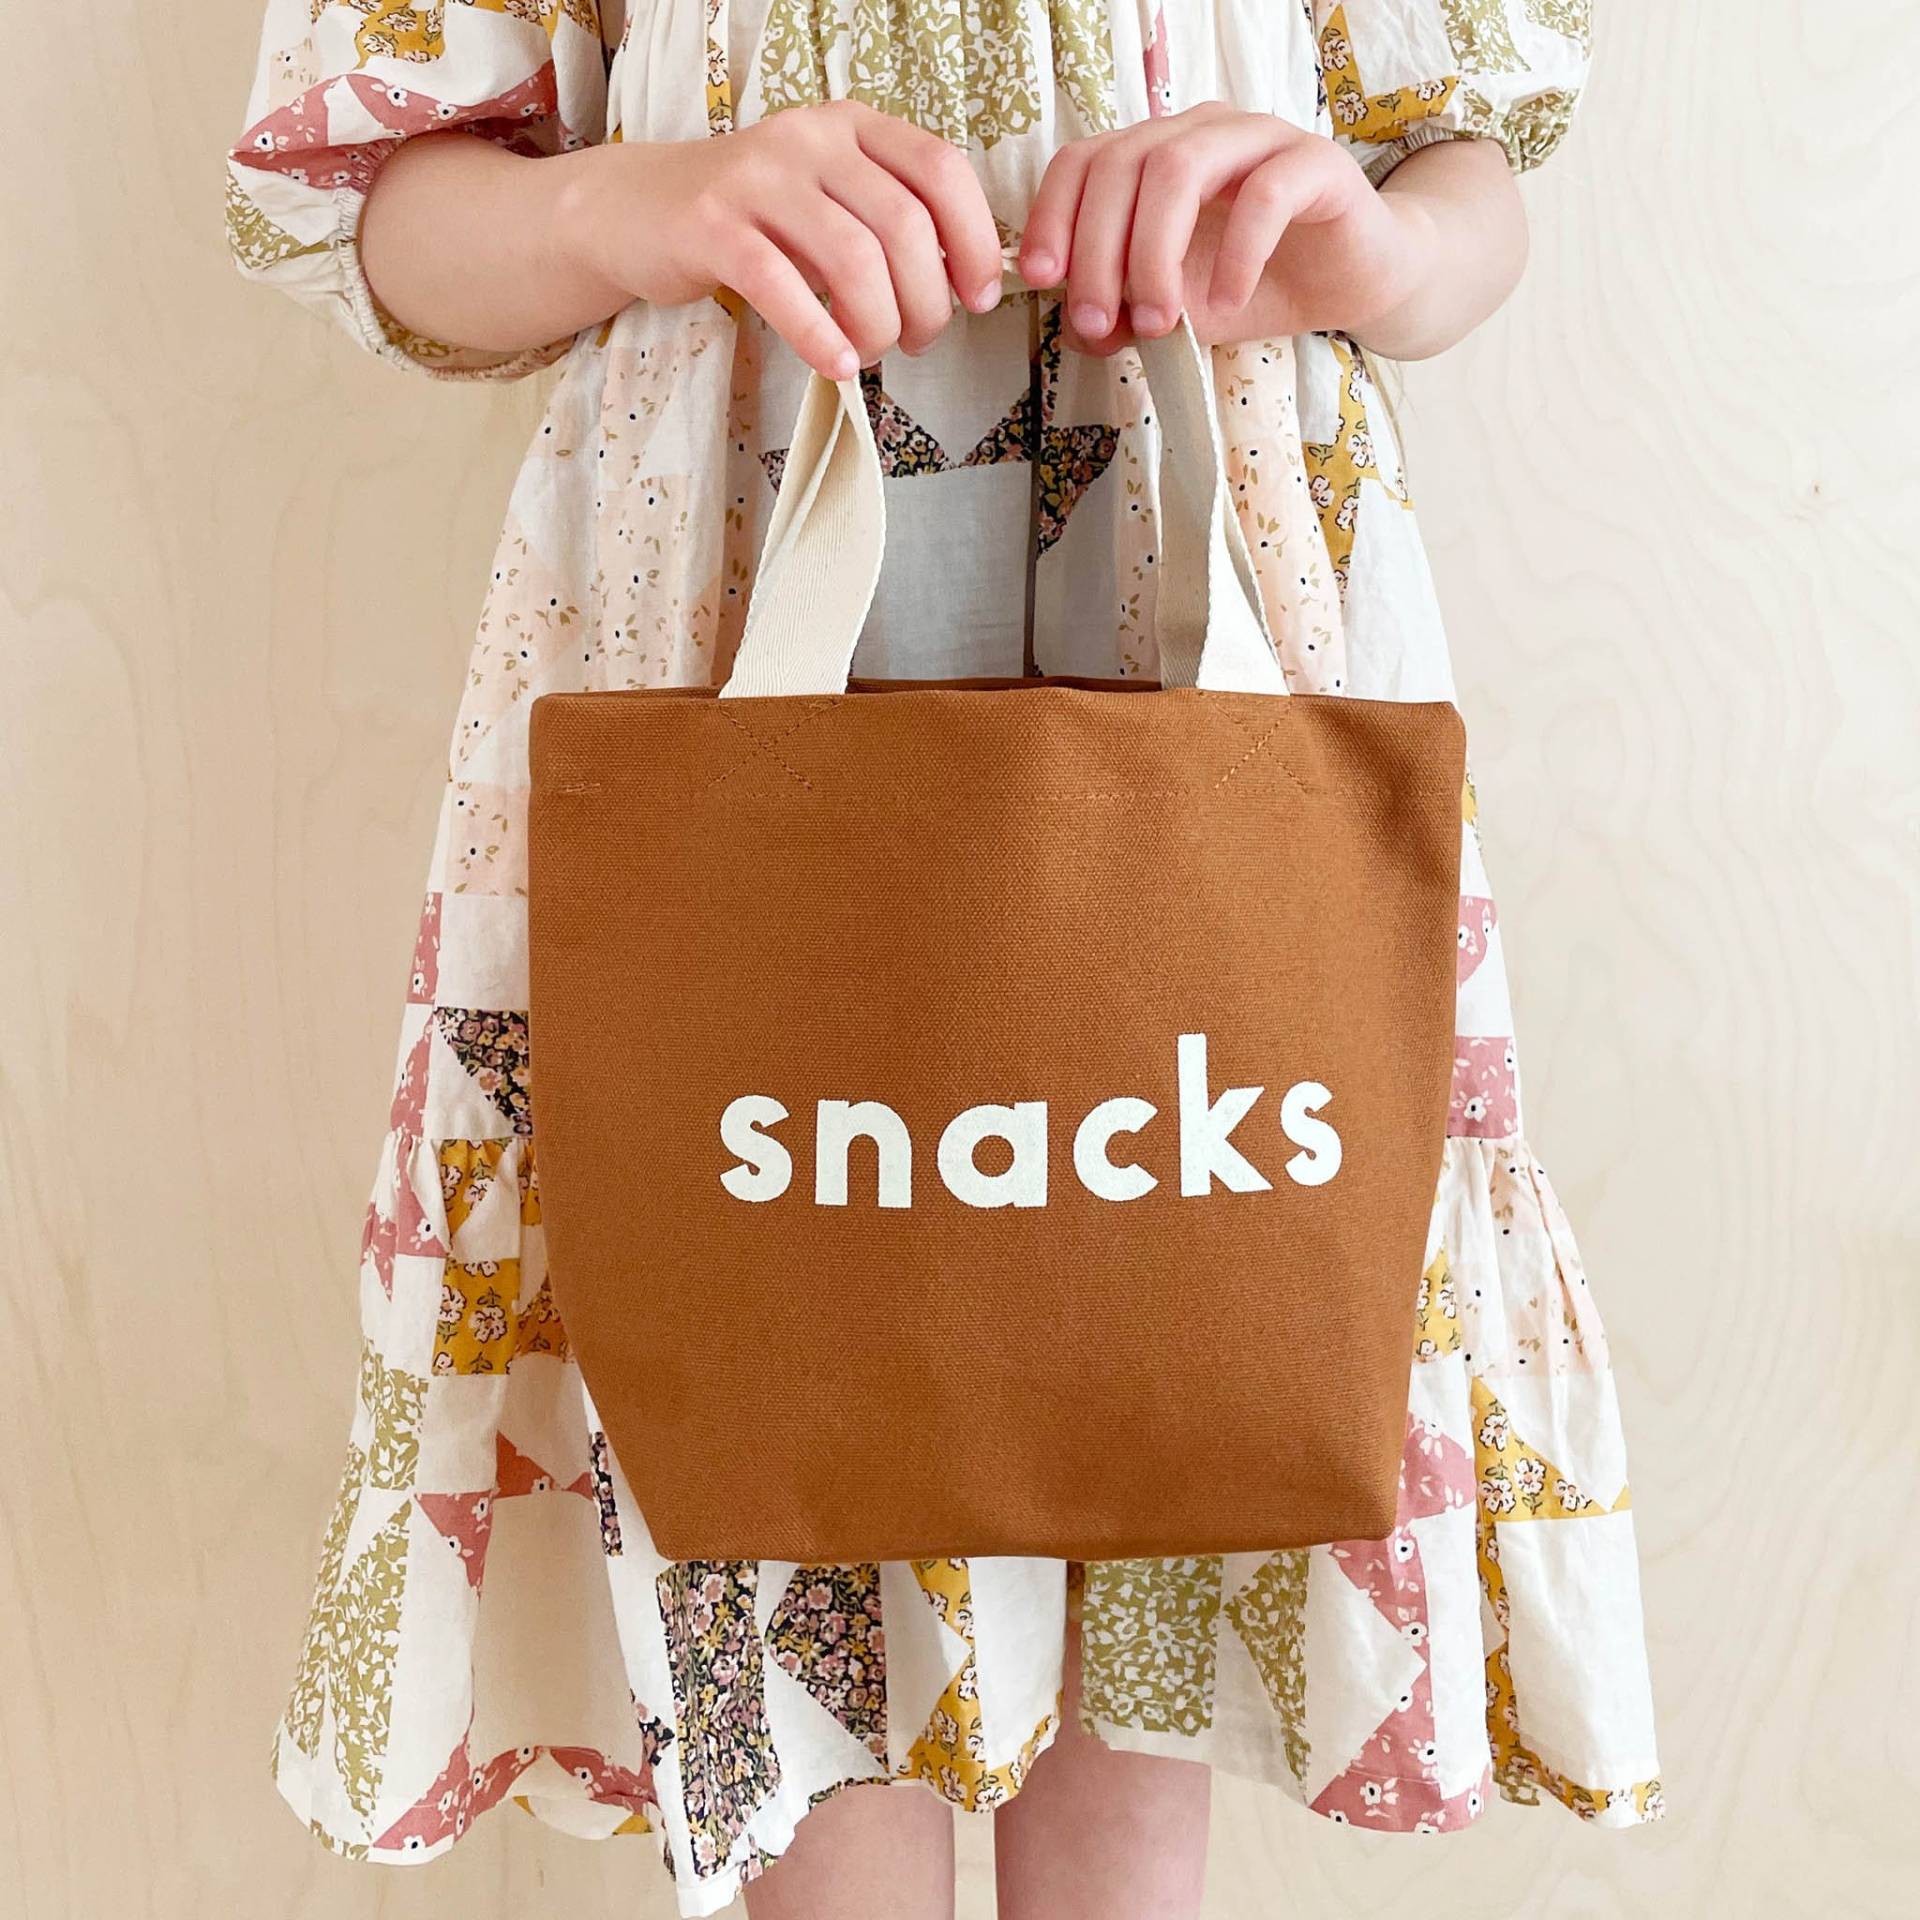 Snacks Tasche - Kinder Tote Bag Mini Lunch Box Canvas Busy von AlphabetBags